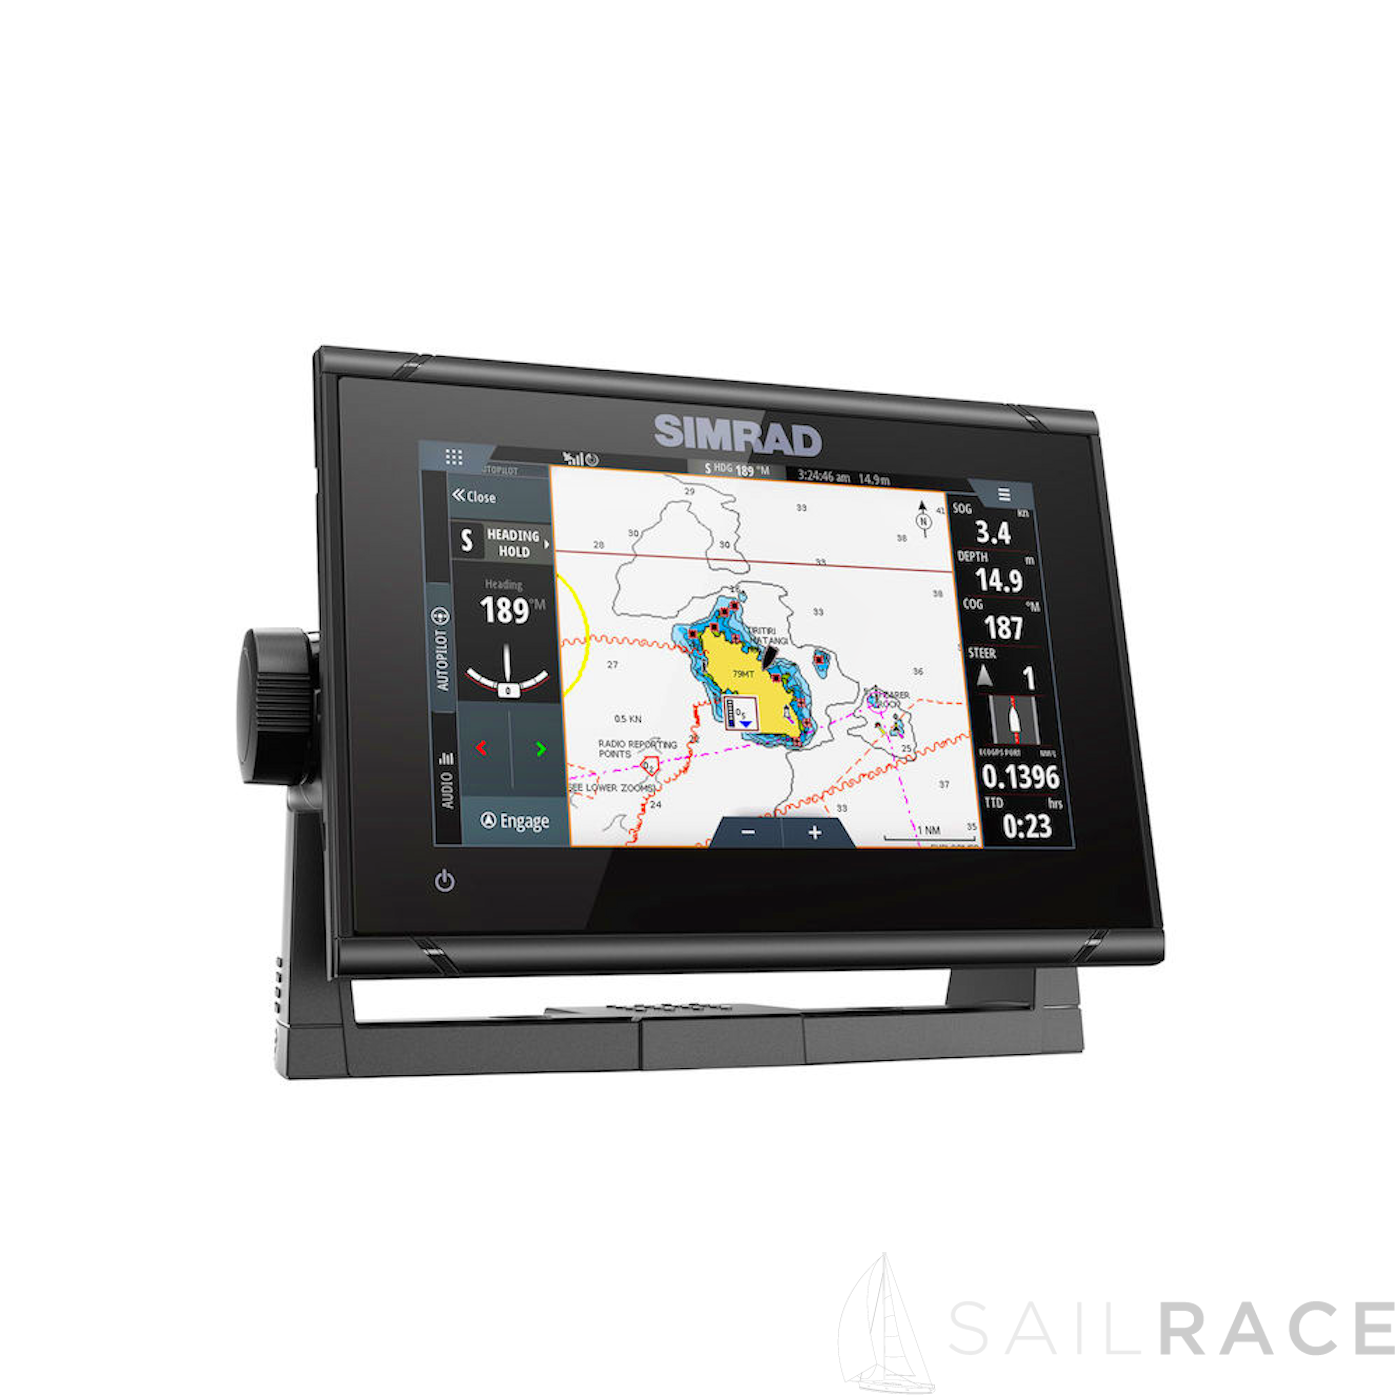 Simrad 7-inch chartplotter and radar display and Insight Pro card - image 3